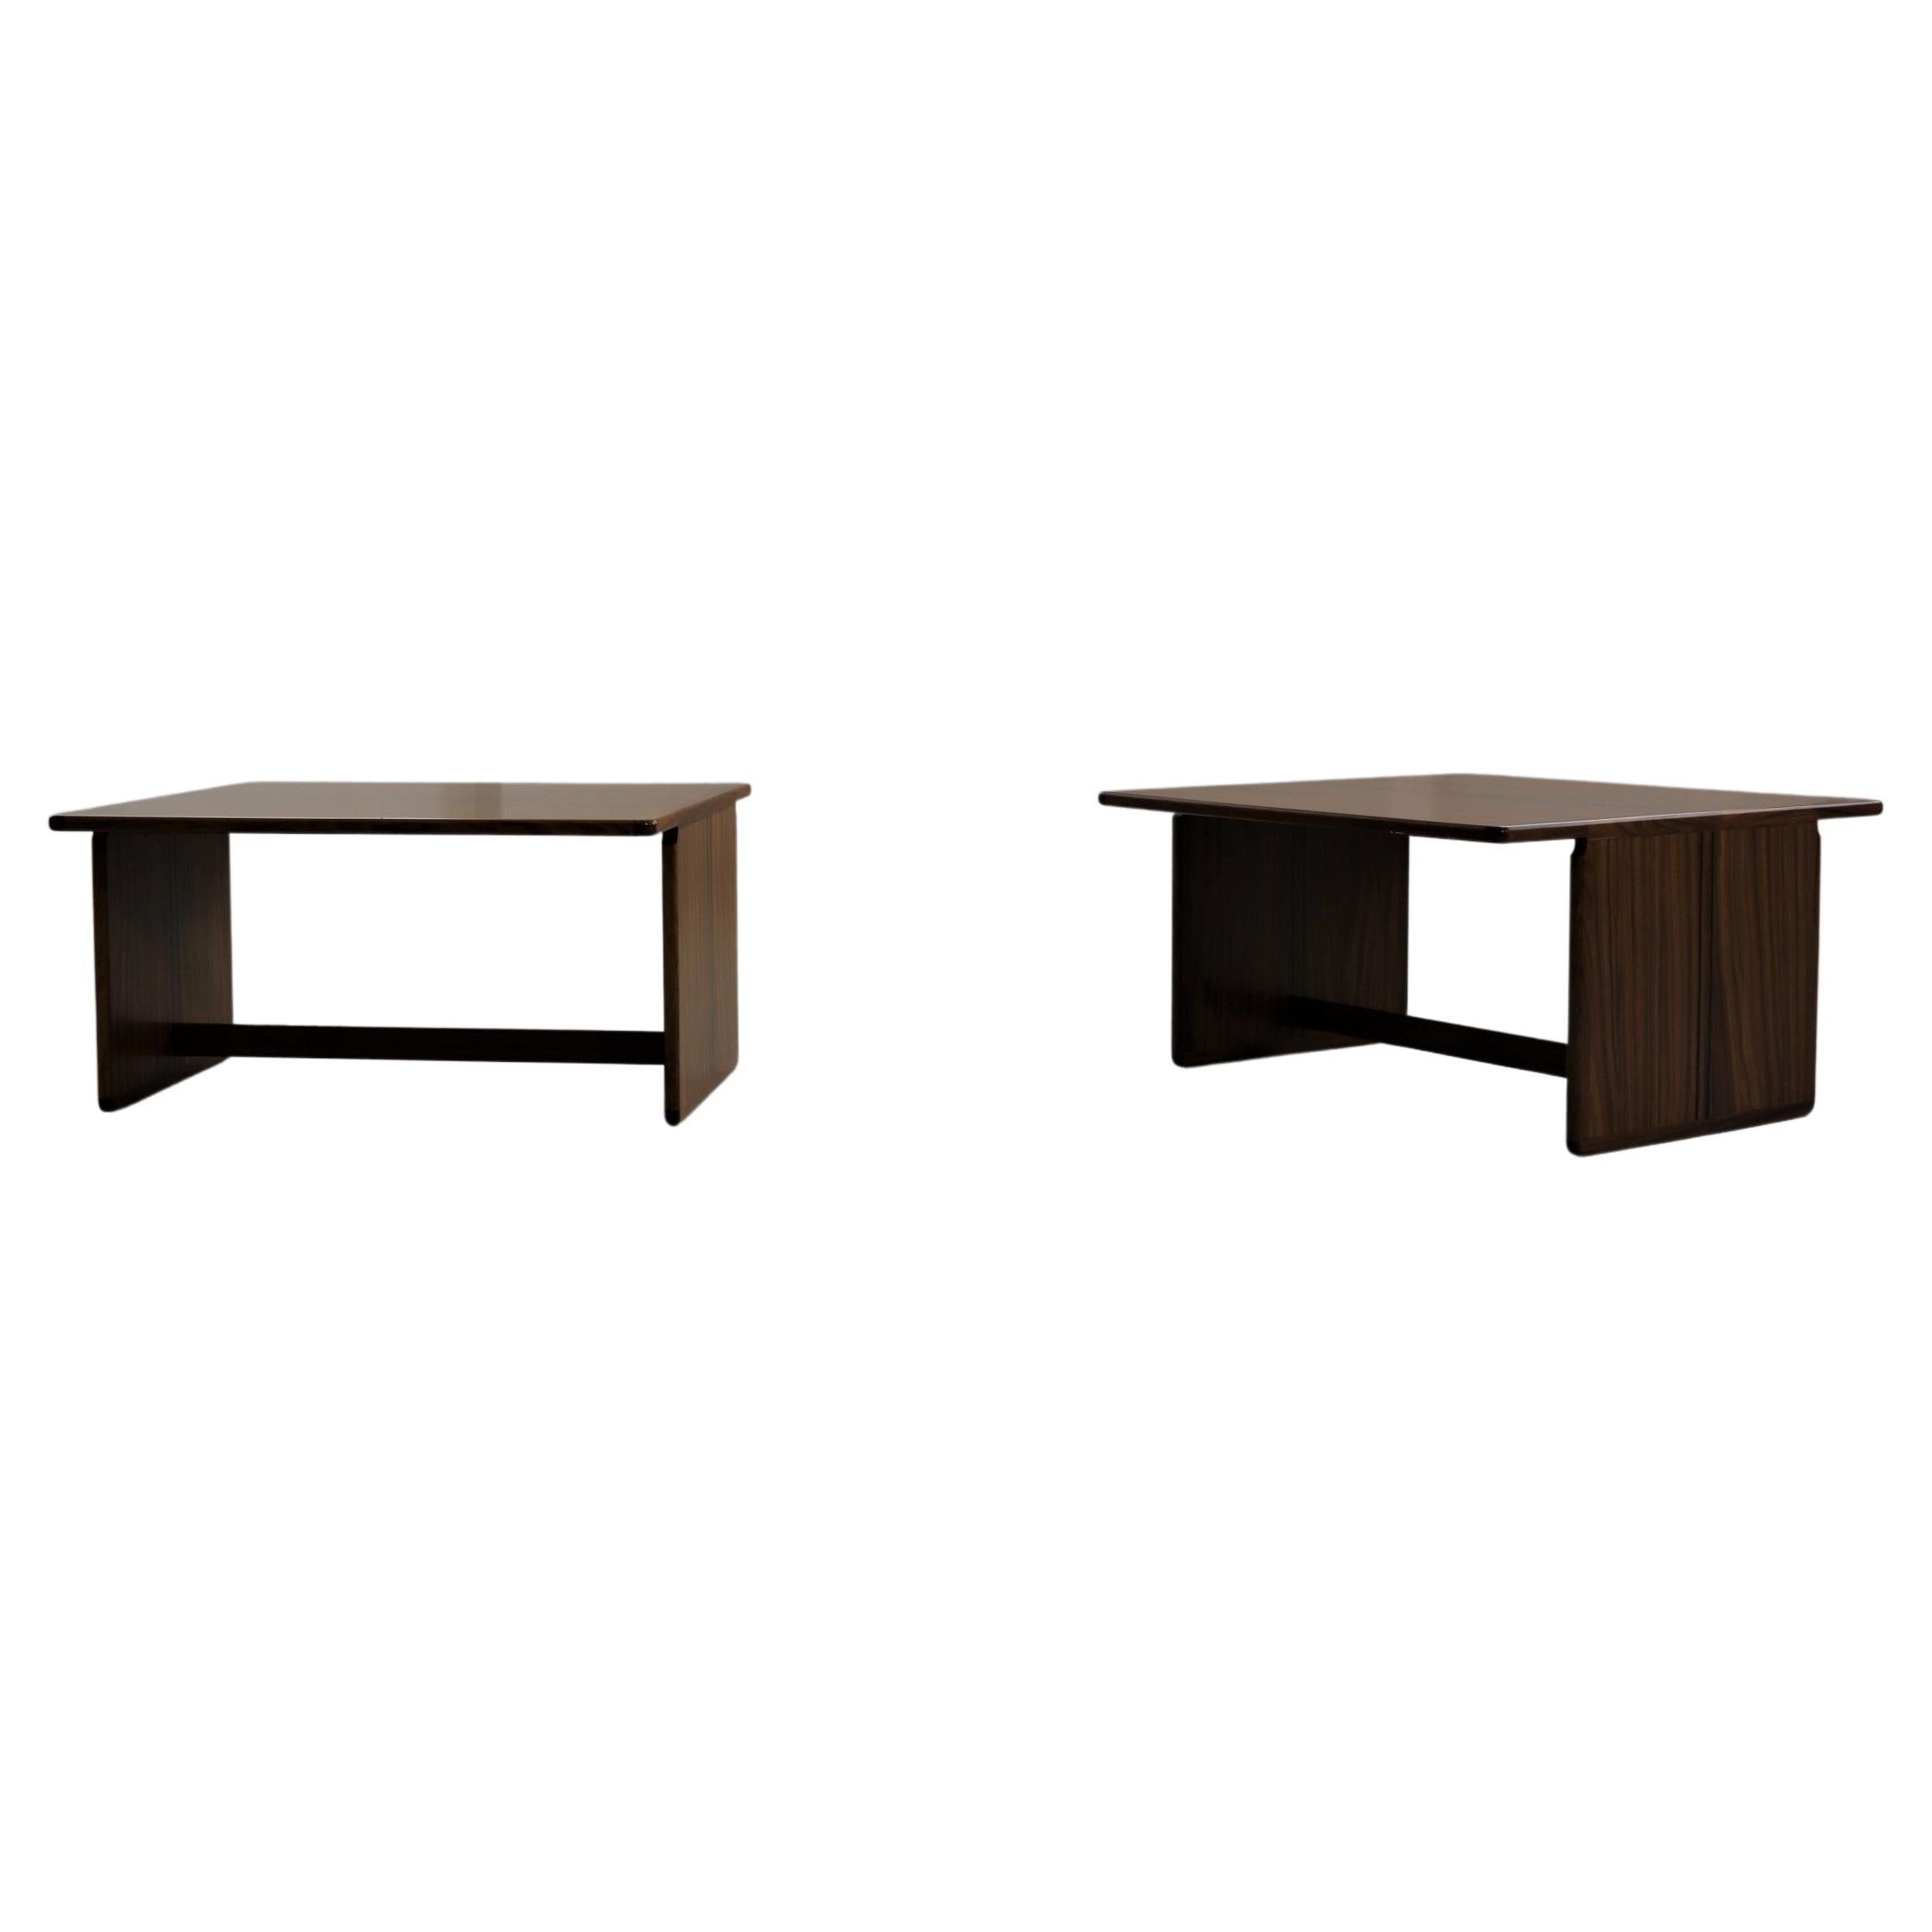 A set of two side table by Afra & Tobia Scarpa Model "Artona" for Maxalto Italy